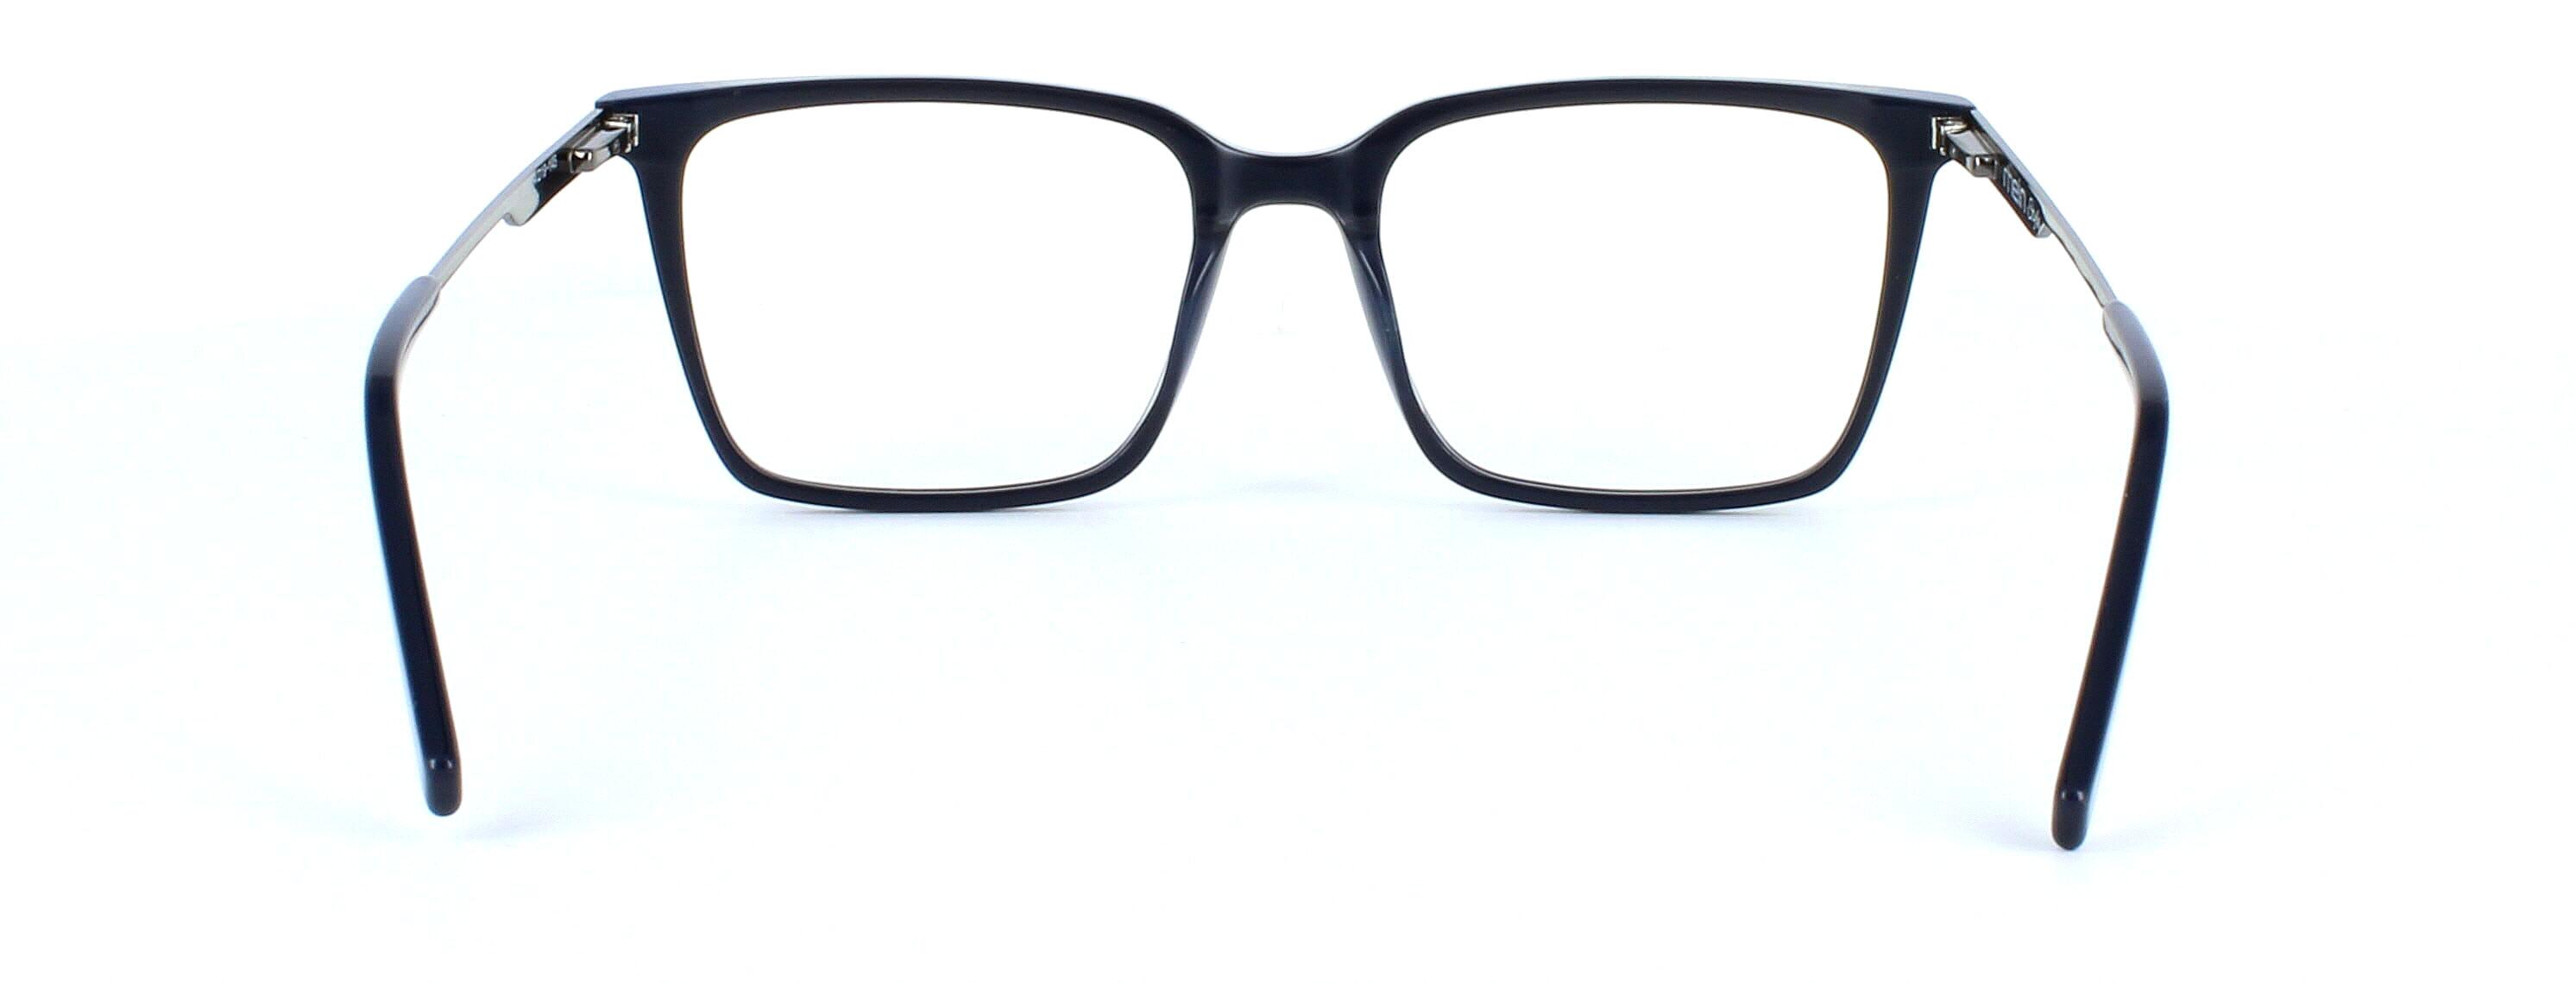 Hadlow - Gent's matt black acetate glasses frame with rectangular shaped lenses - image 3